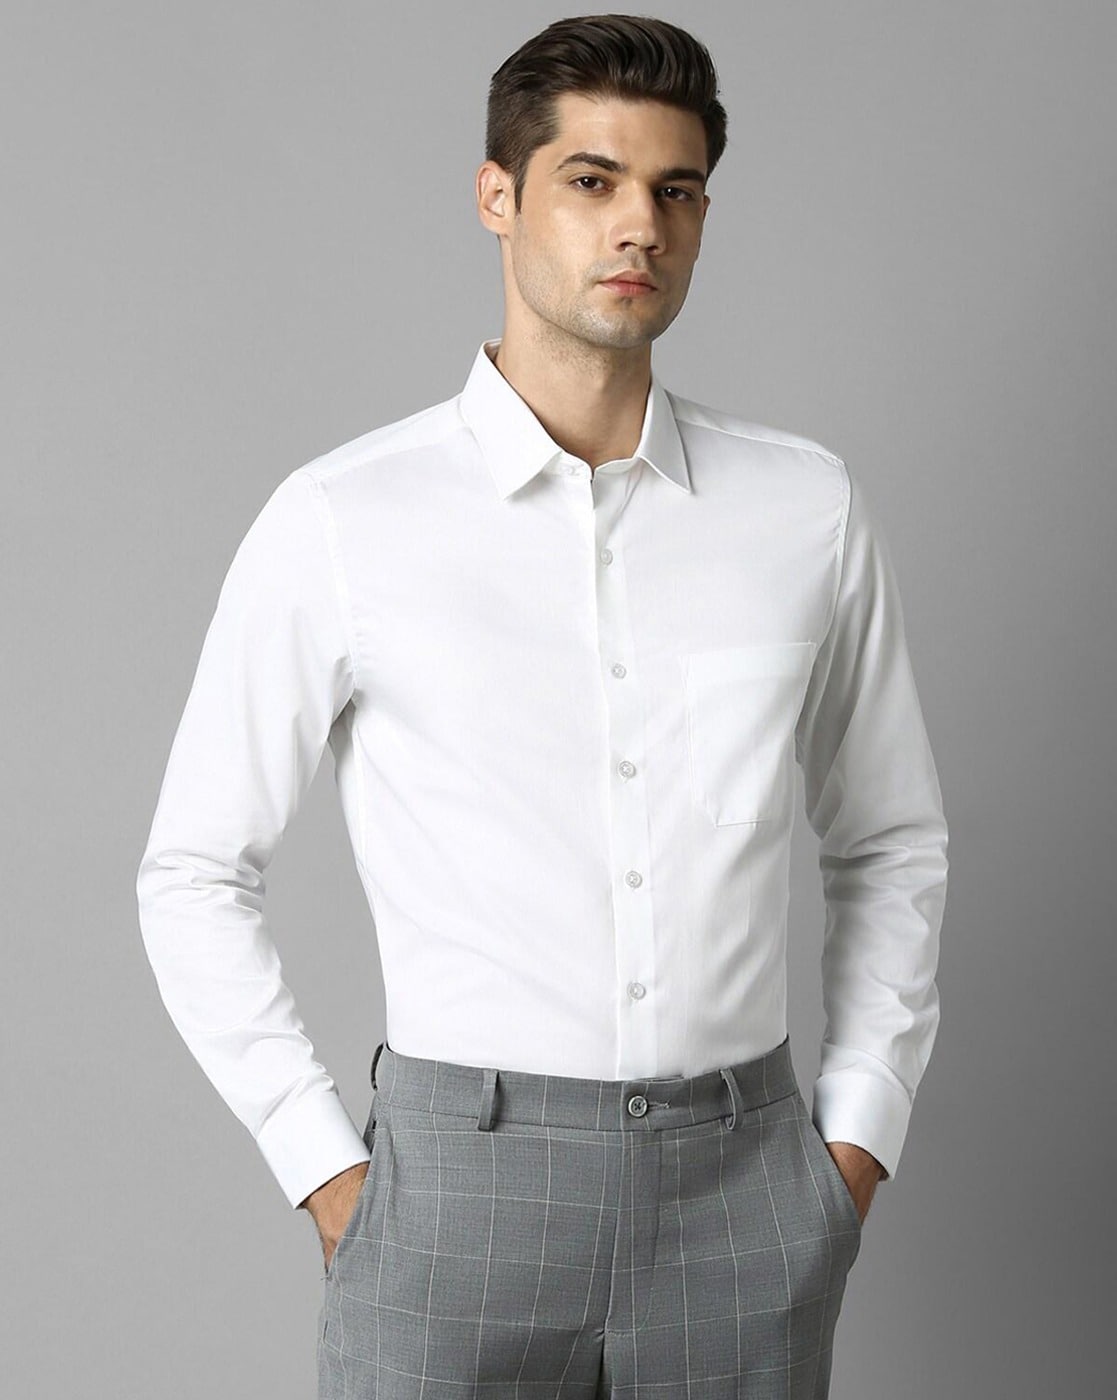 Buy Louis Philippe White Shirt, 39 at